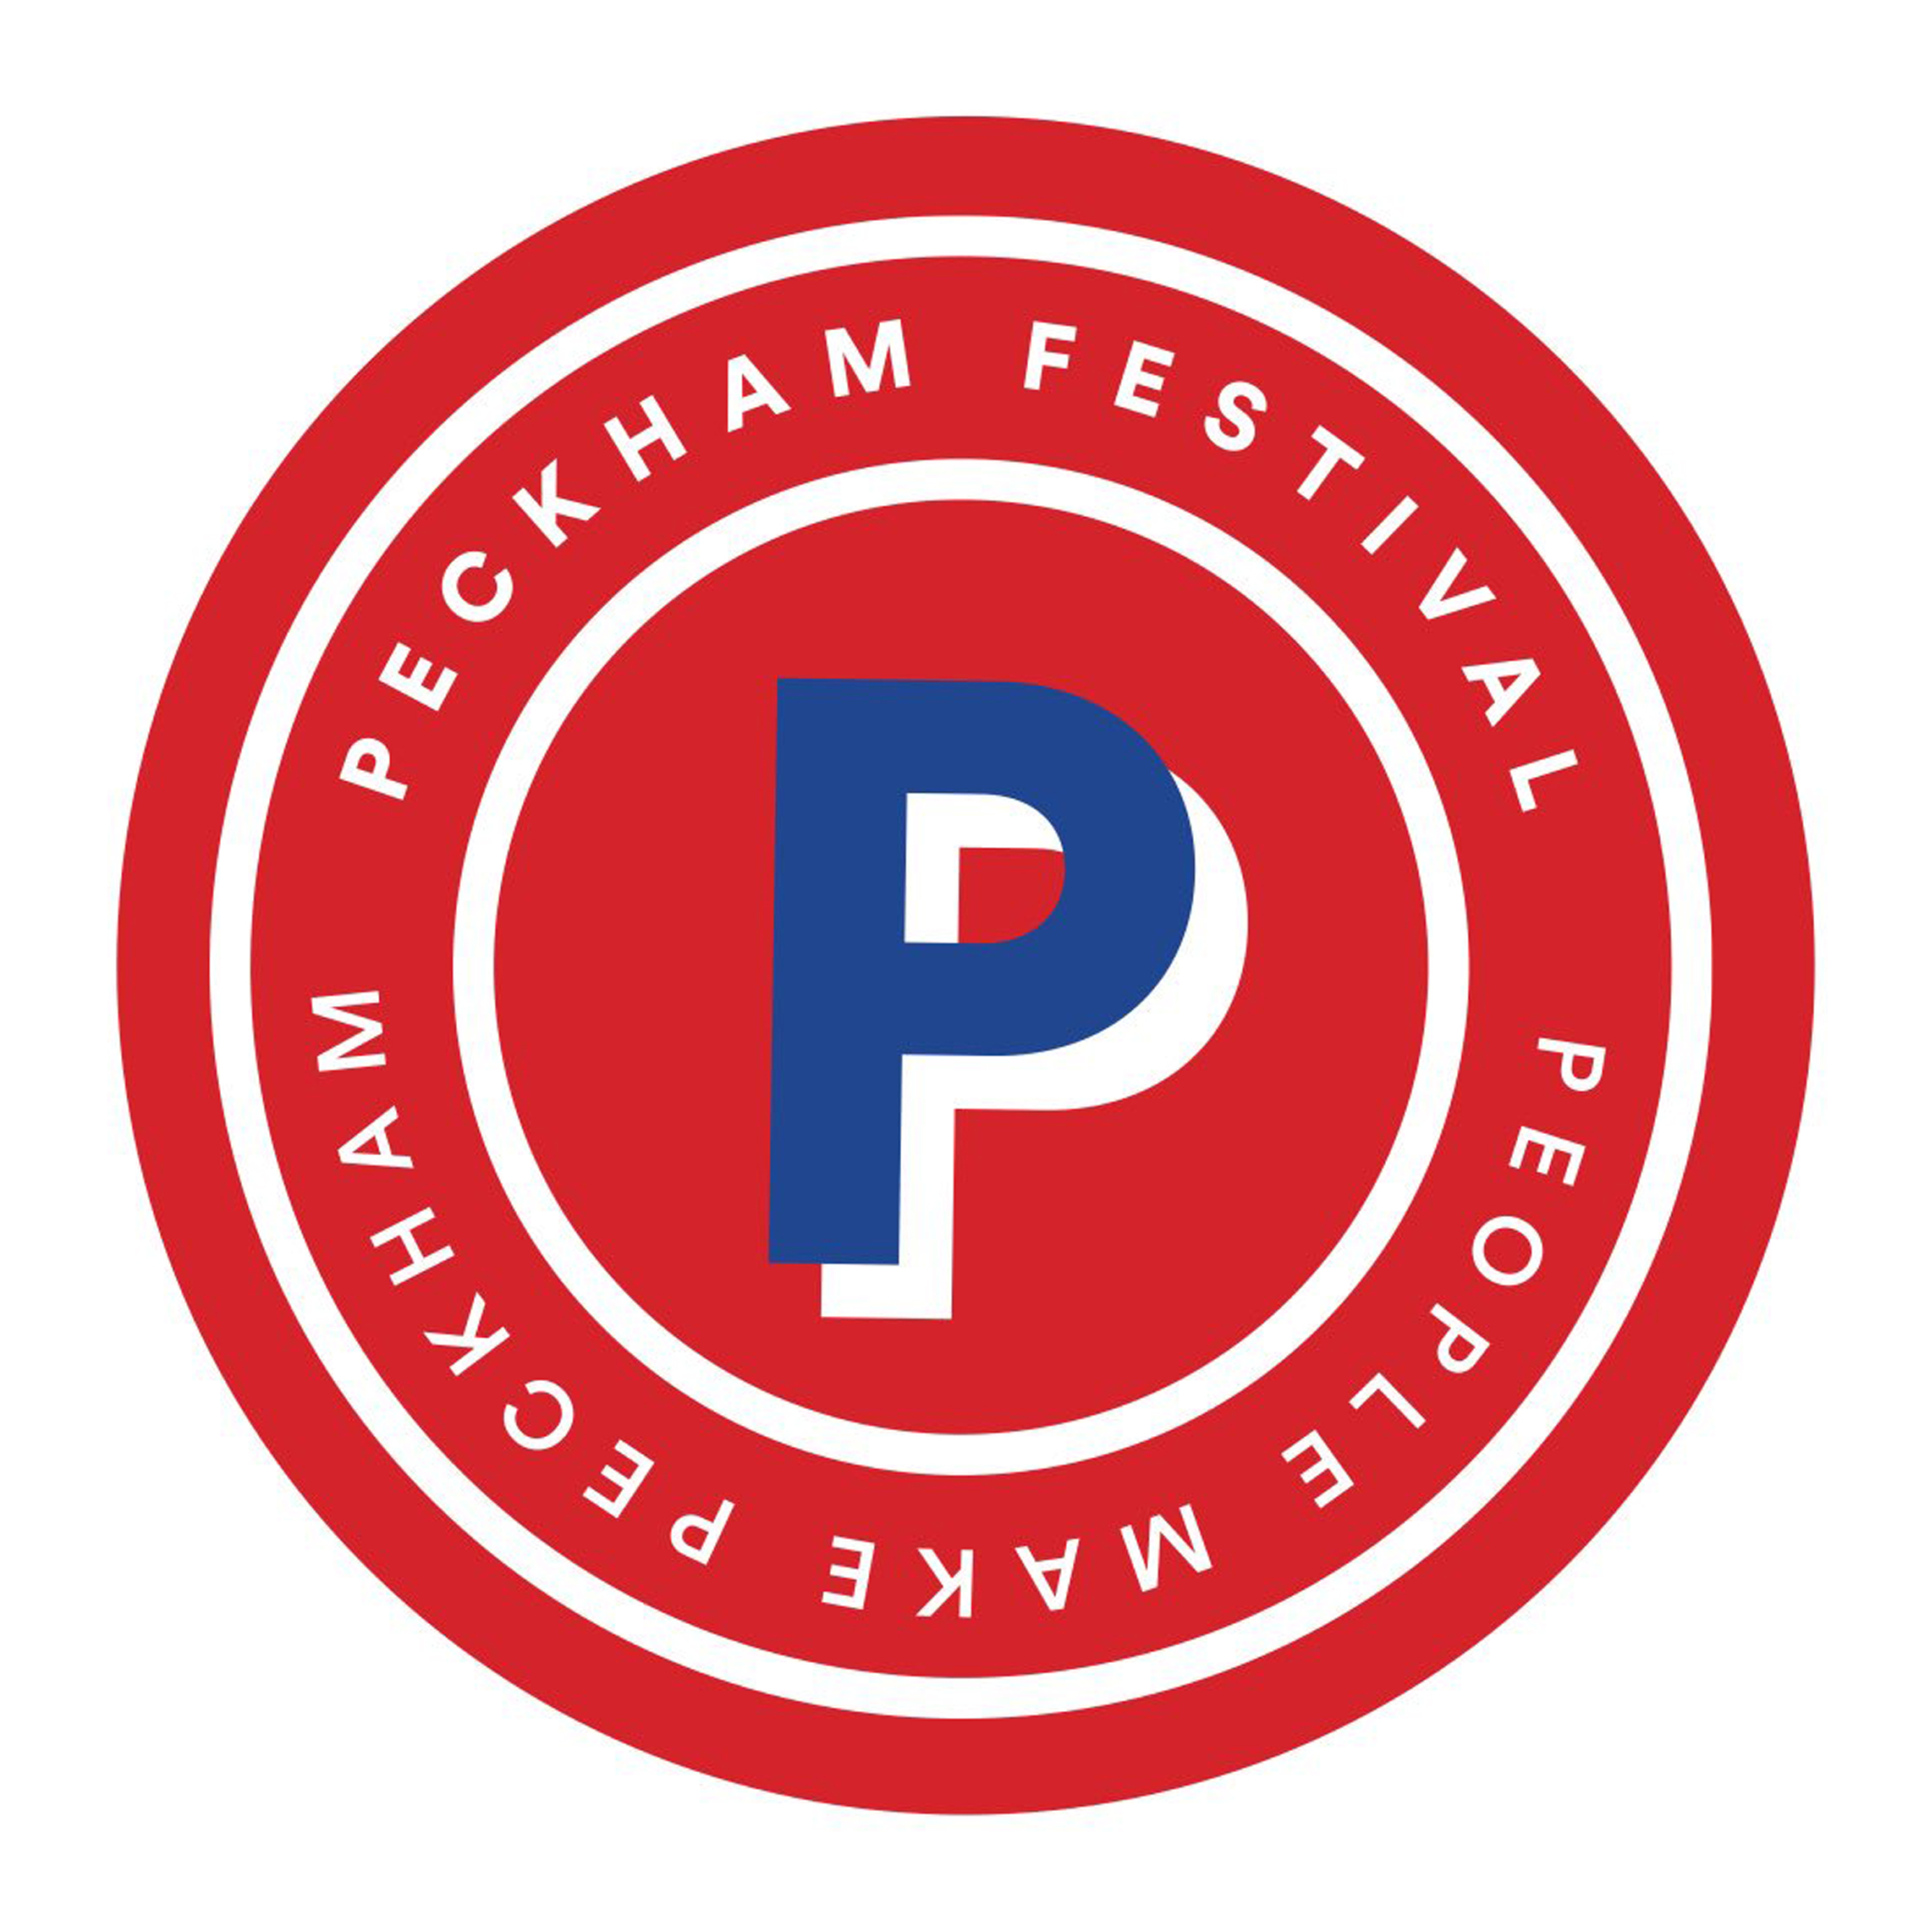 Peckham Festival